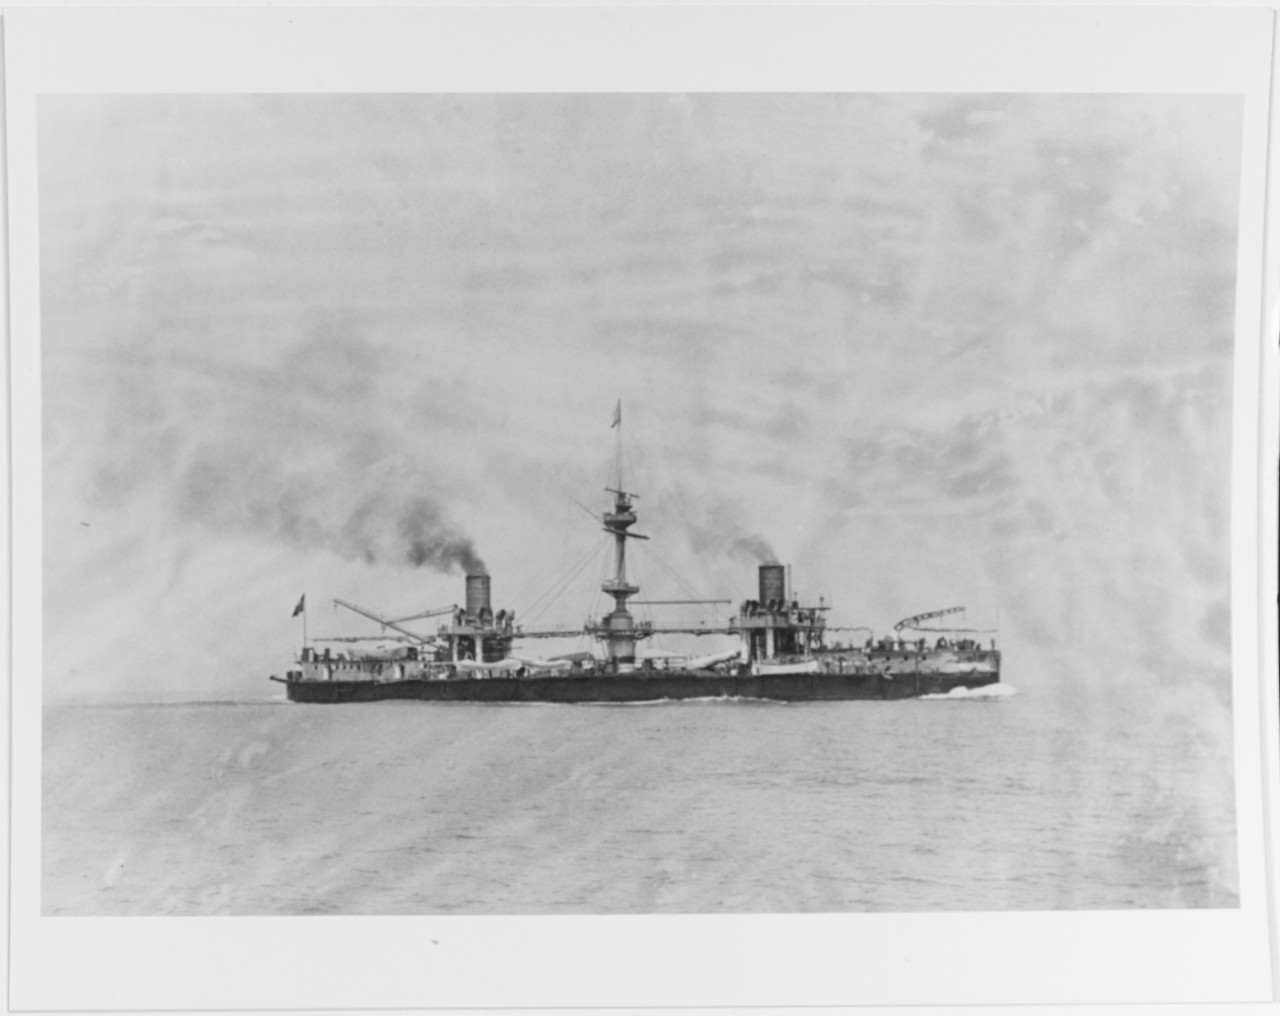 FRANCESCO MOROSINI (Italian Battleship, 1885-1909)